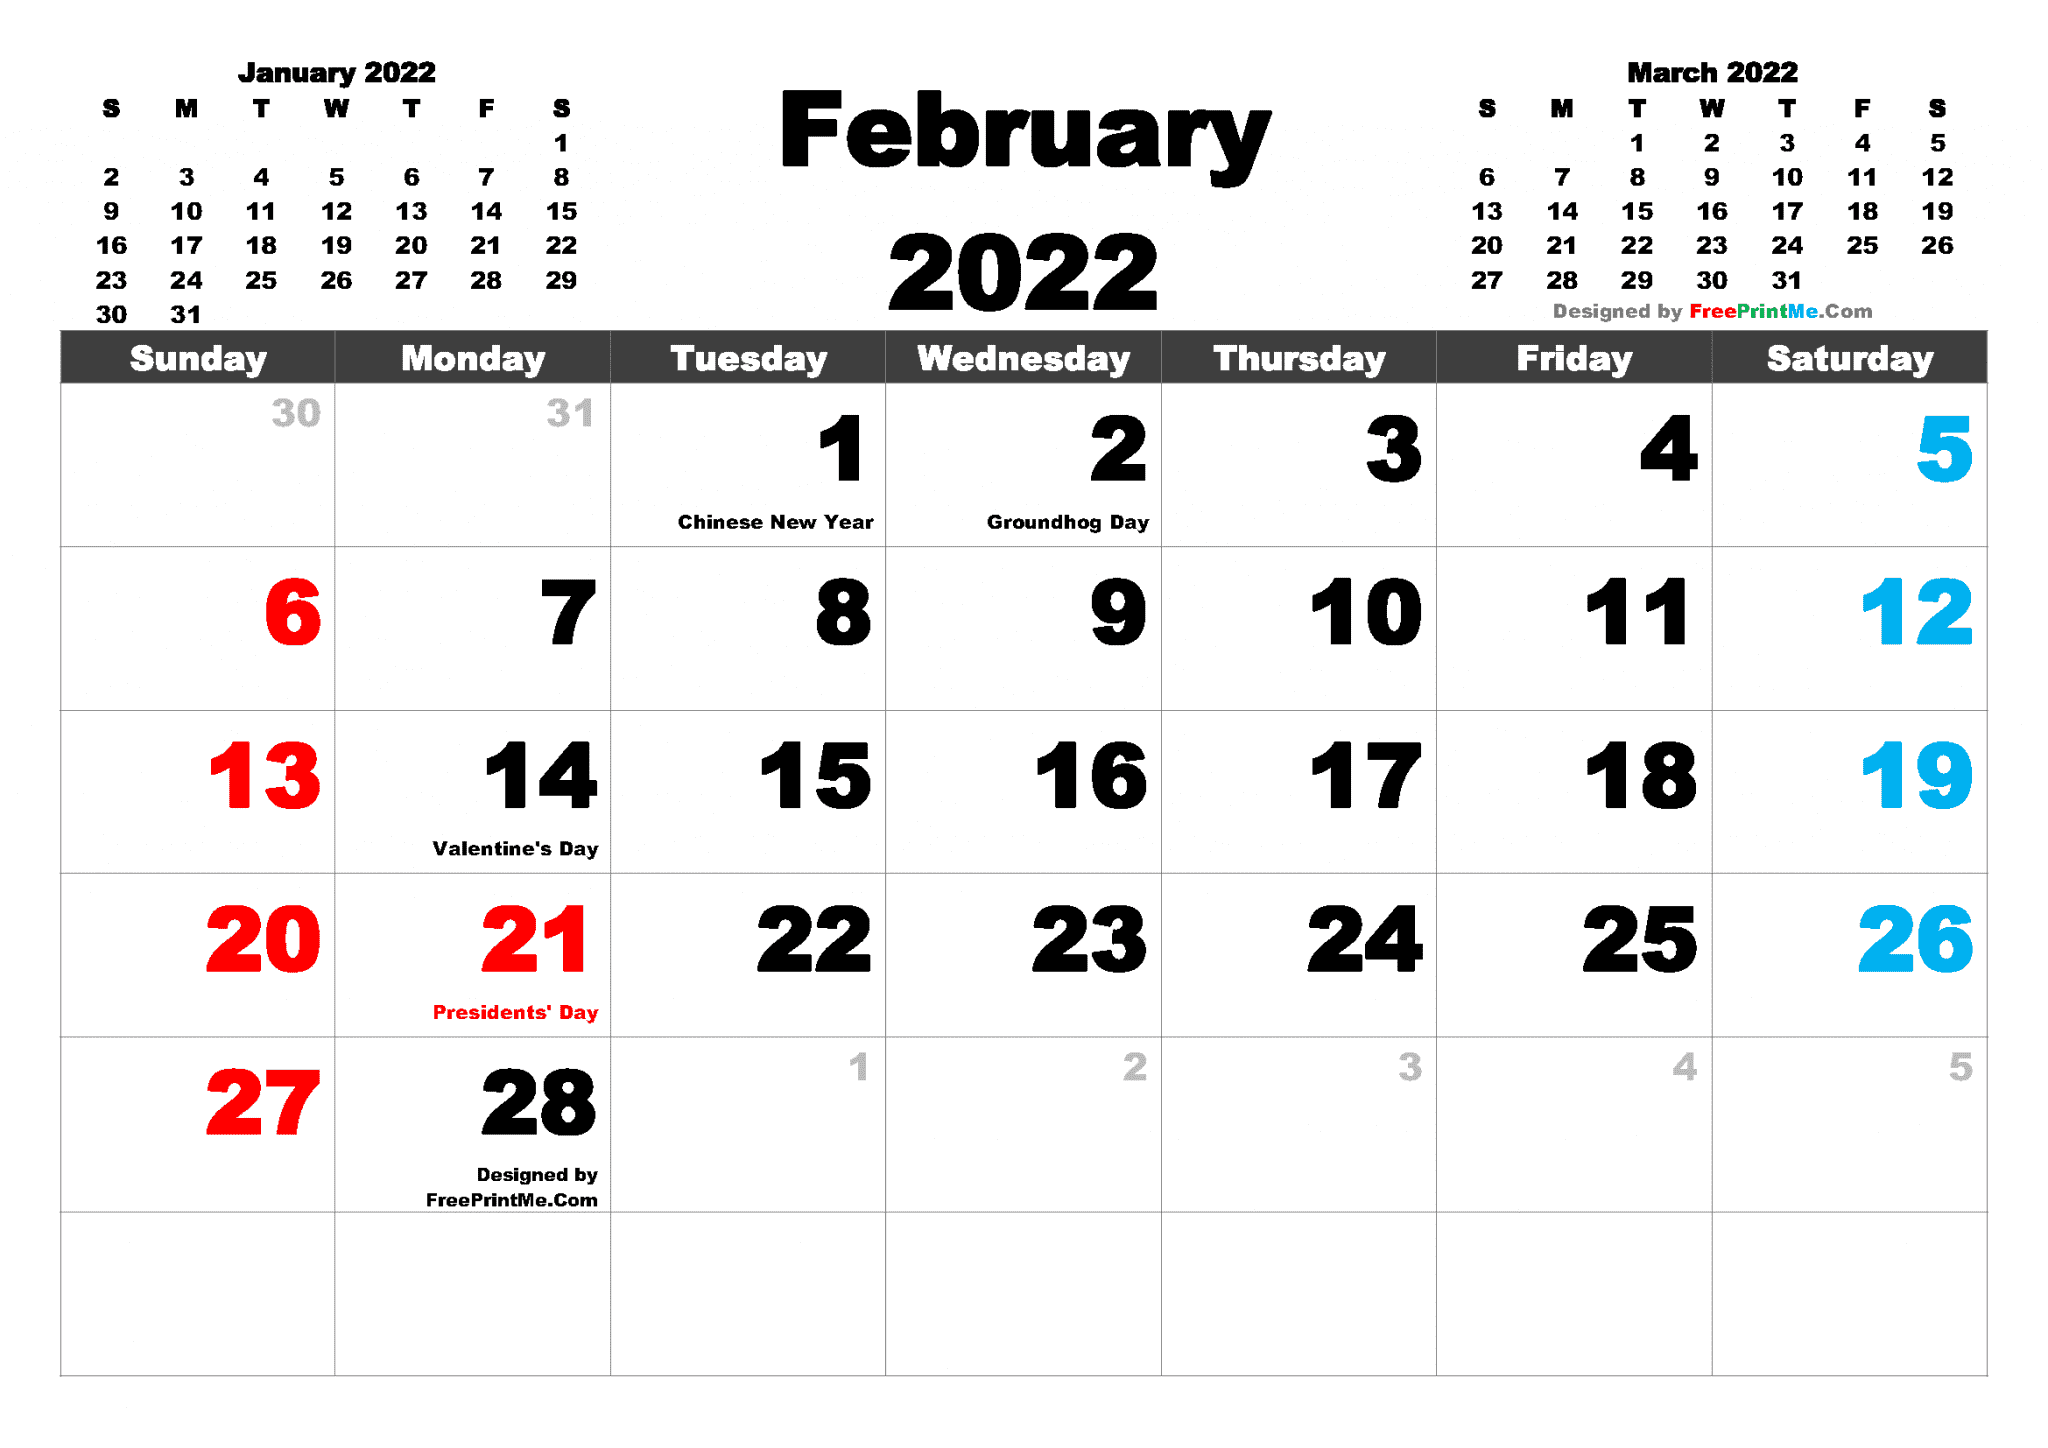 february-2022-calendar-february-2022-free-printables-riset